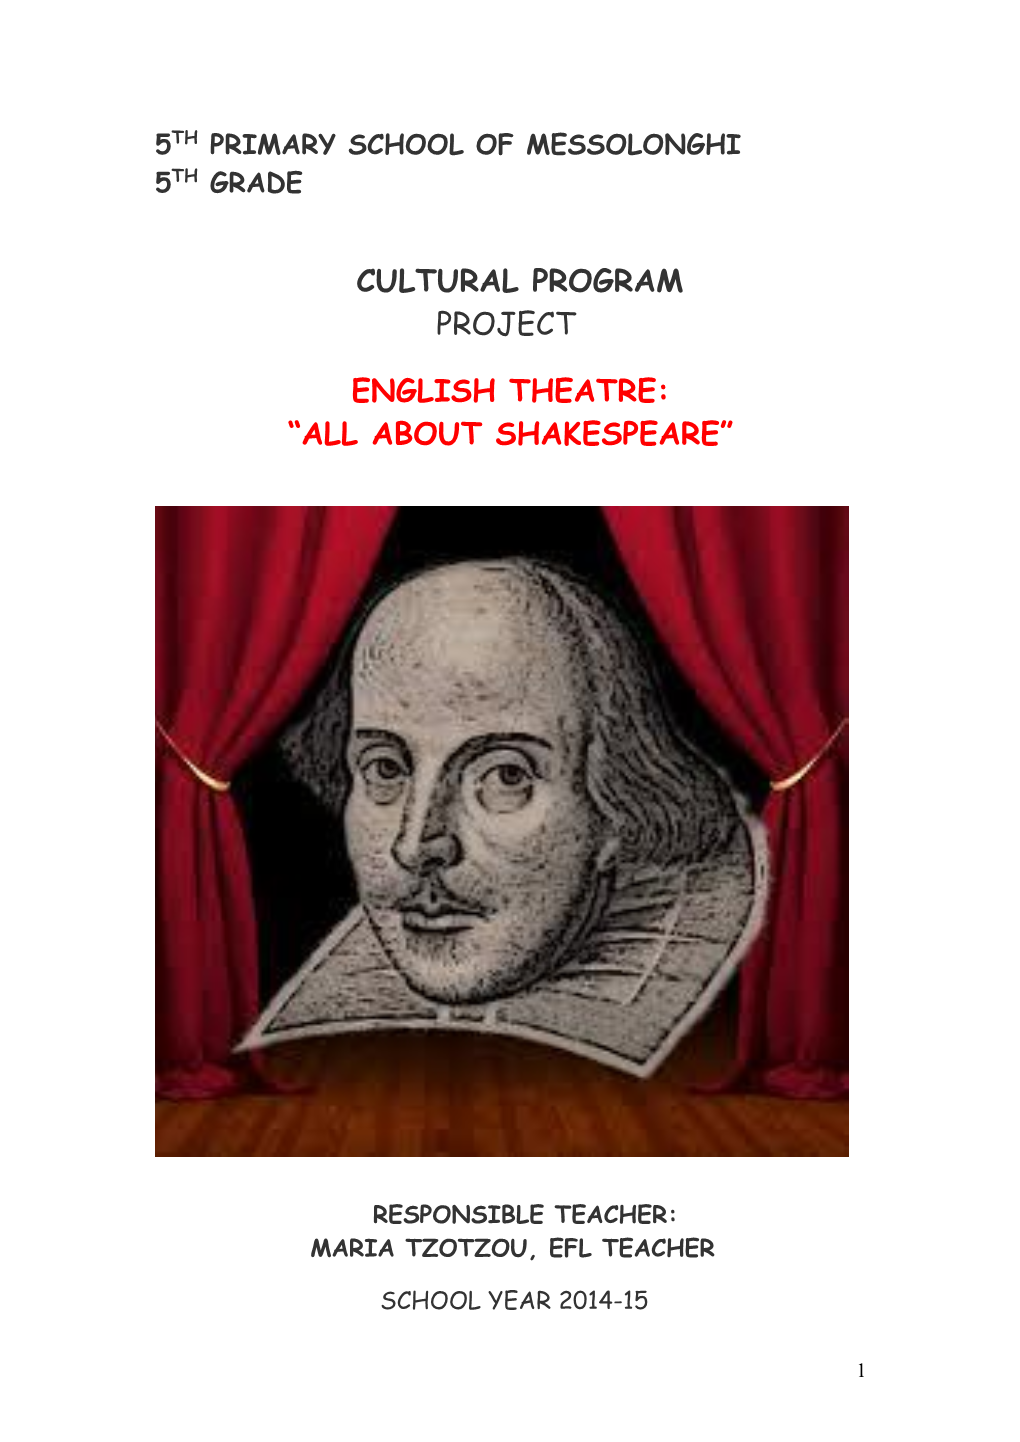 Cultural Program Project English Theatre: “All